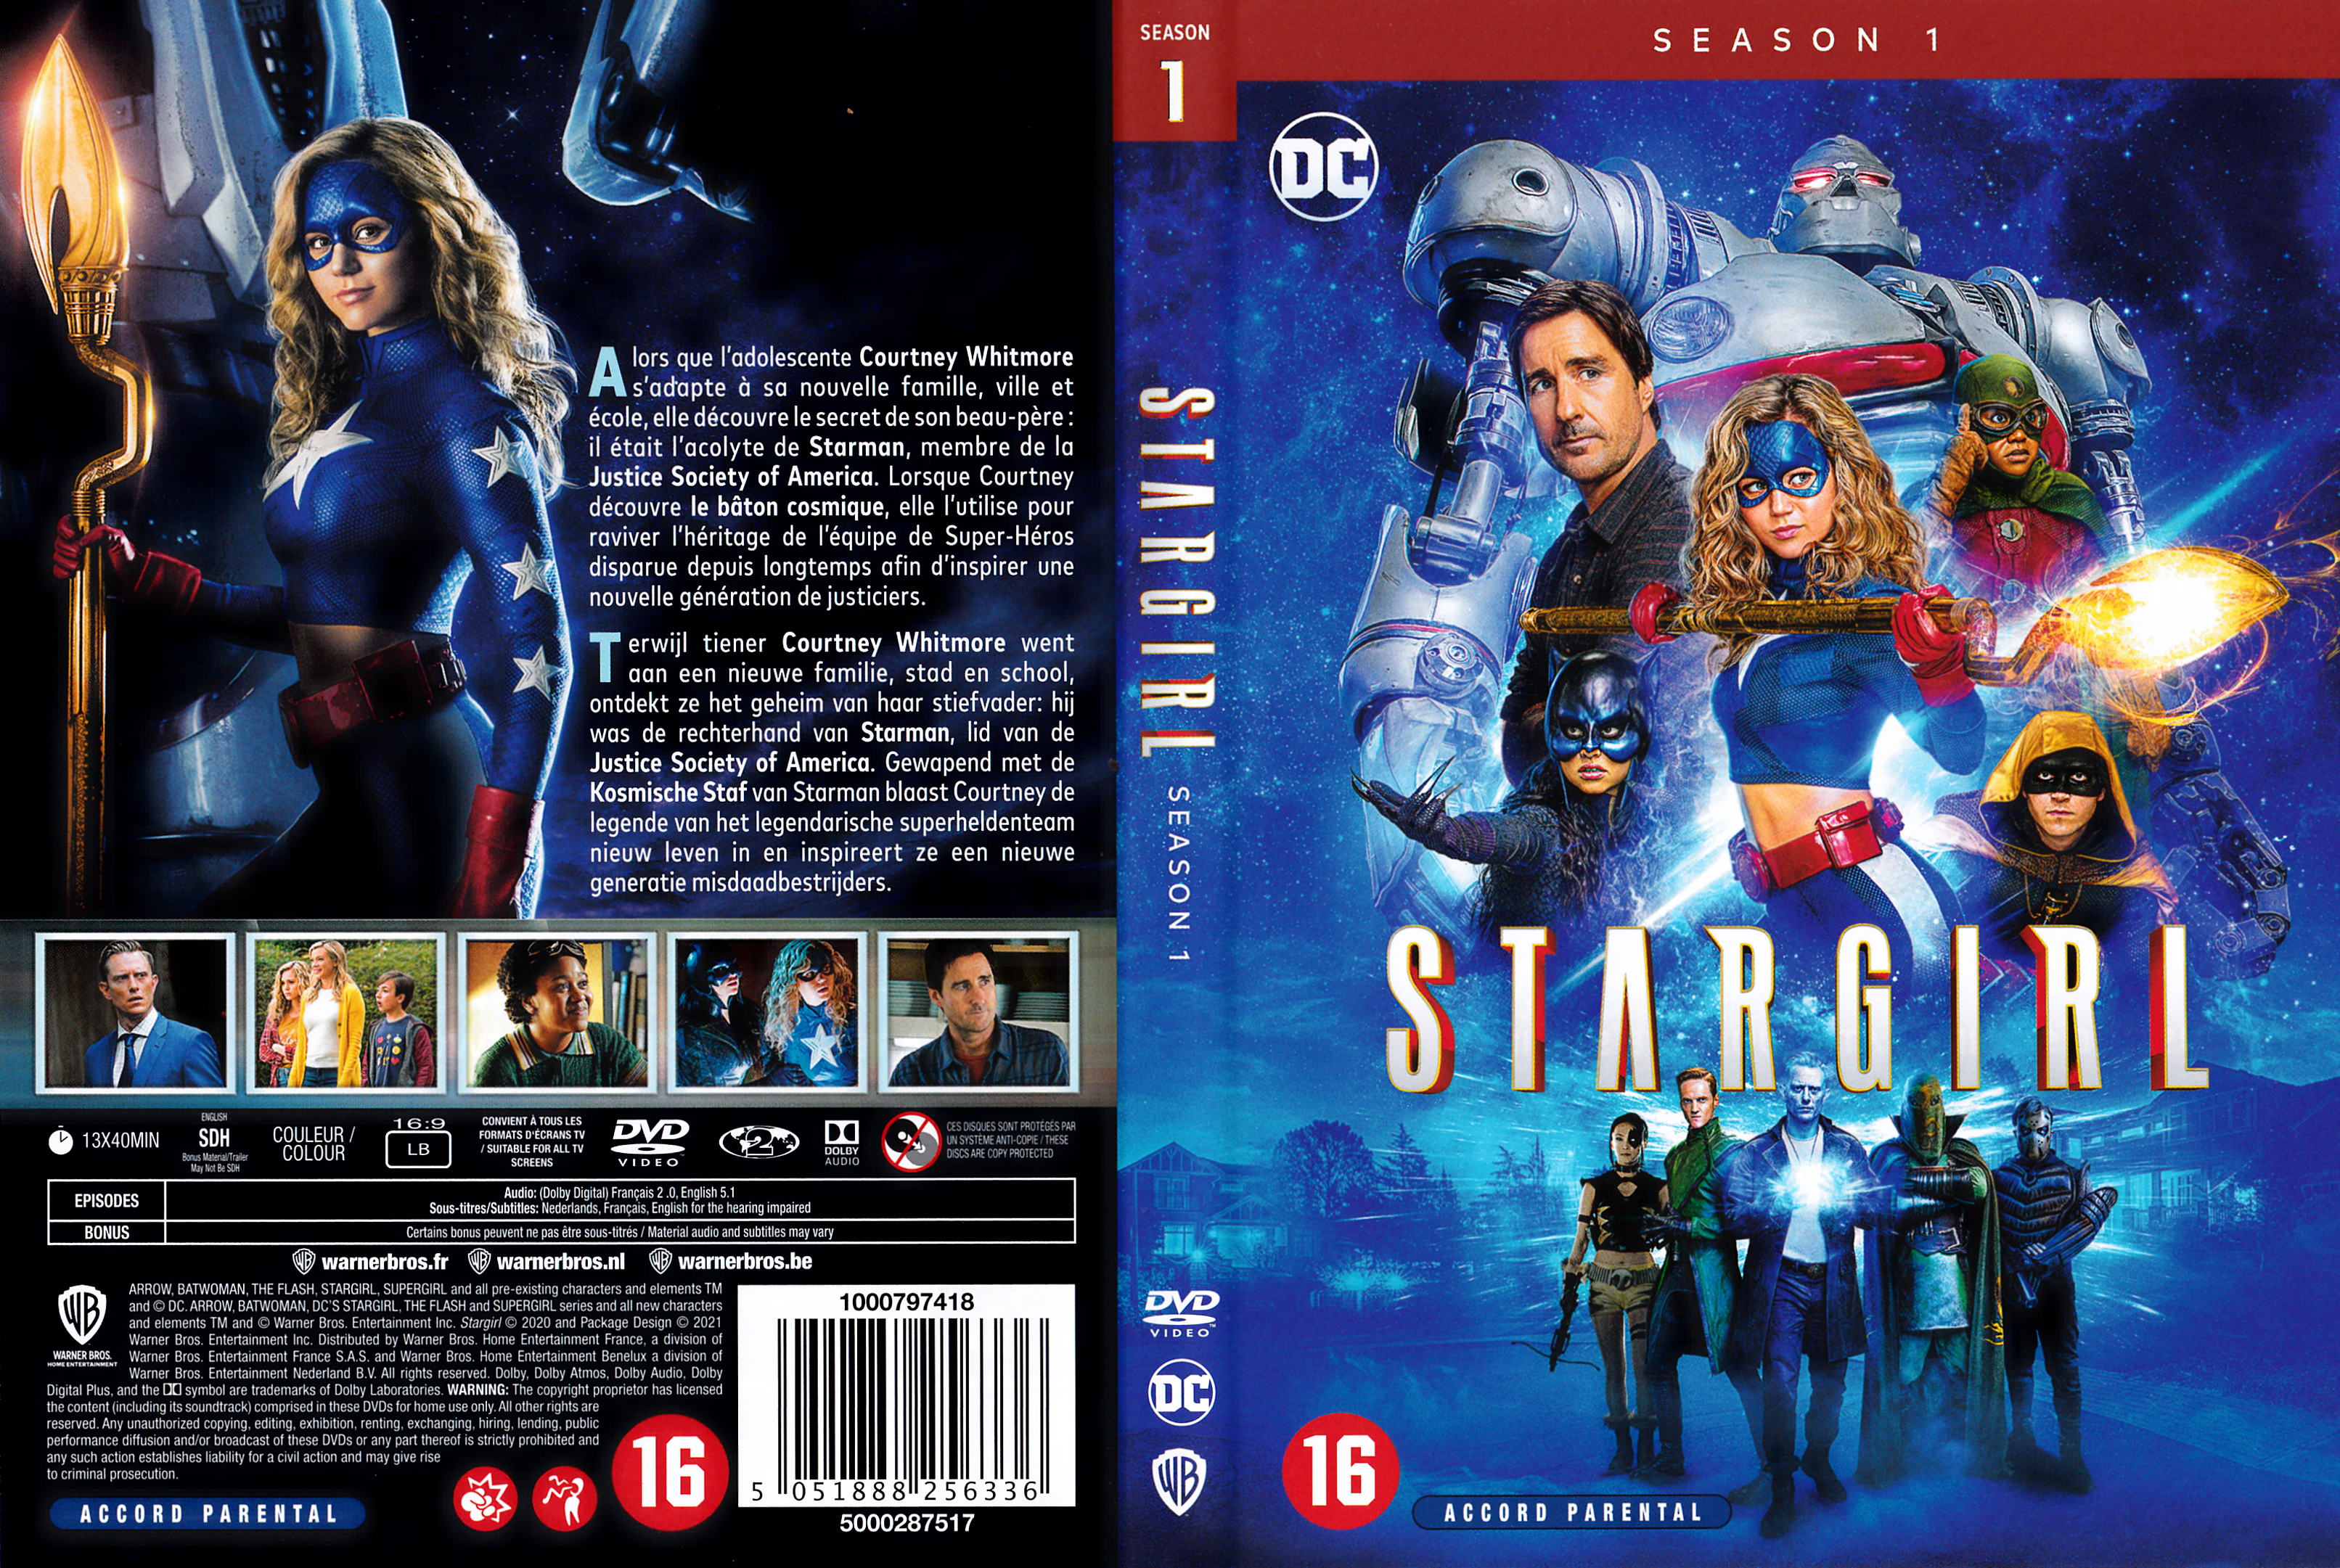 Jaquette DVD Stargirl saison 01